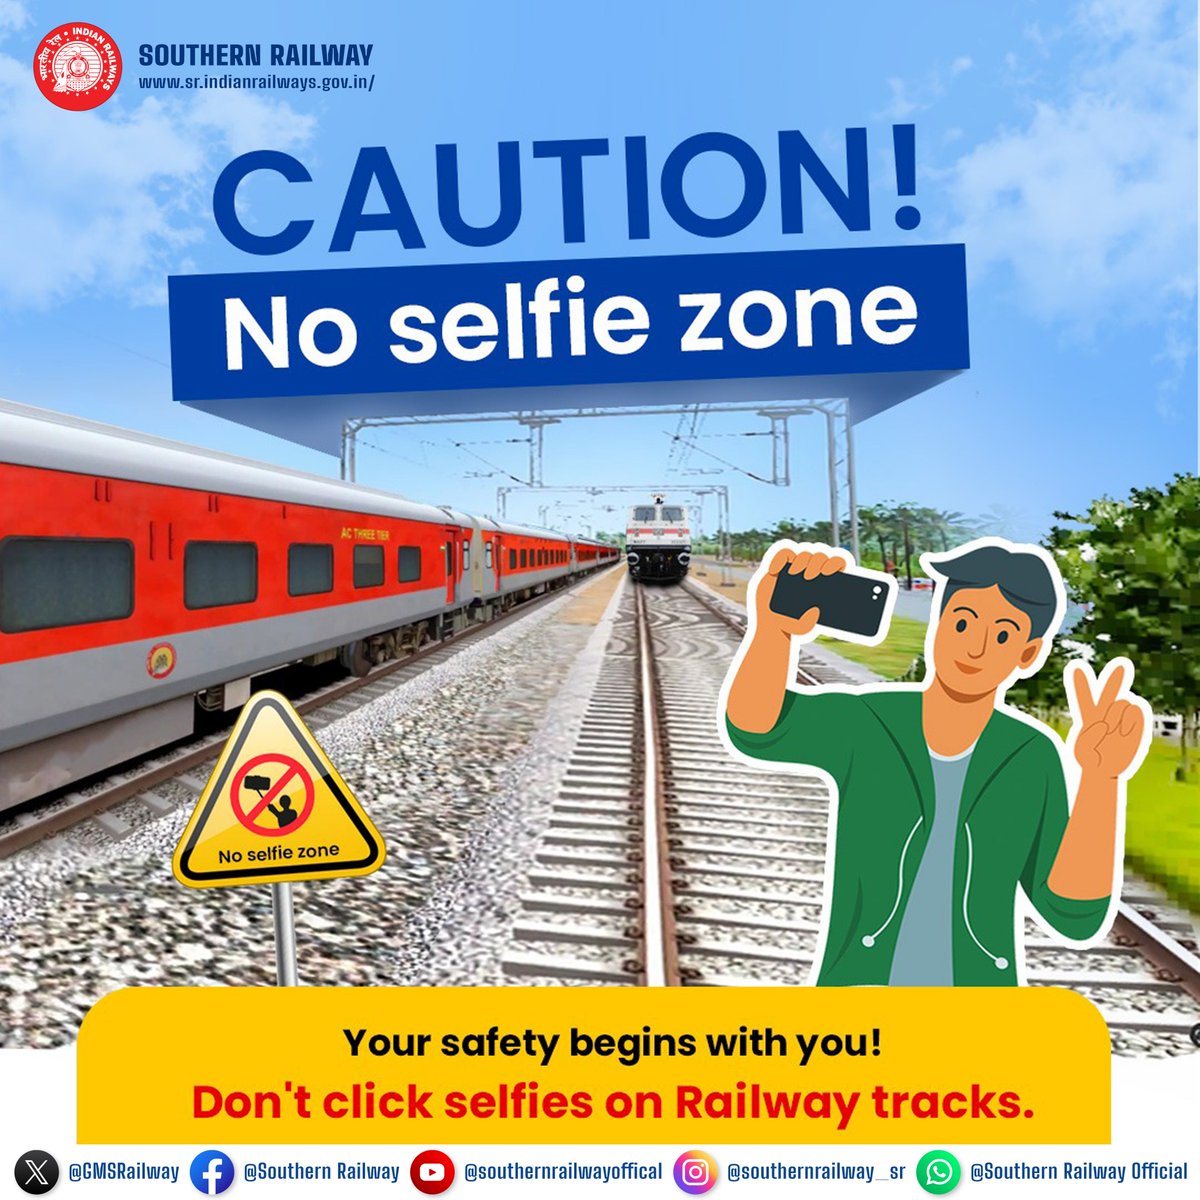 🚫 Avoid selfies on tracks! Stay safe. Capture memories responsibly. Capture adventures responsibly, skip risky selfies on tracks. #SafetyFirst